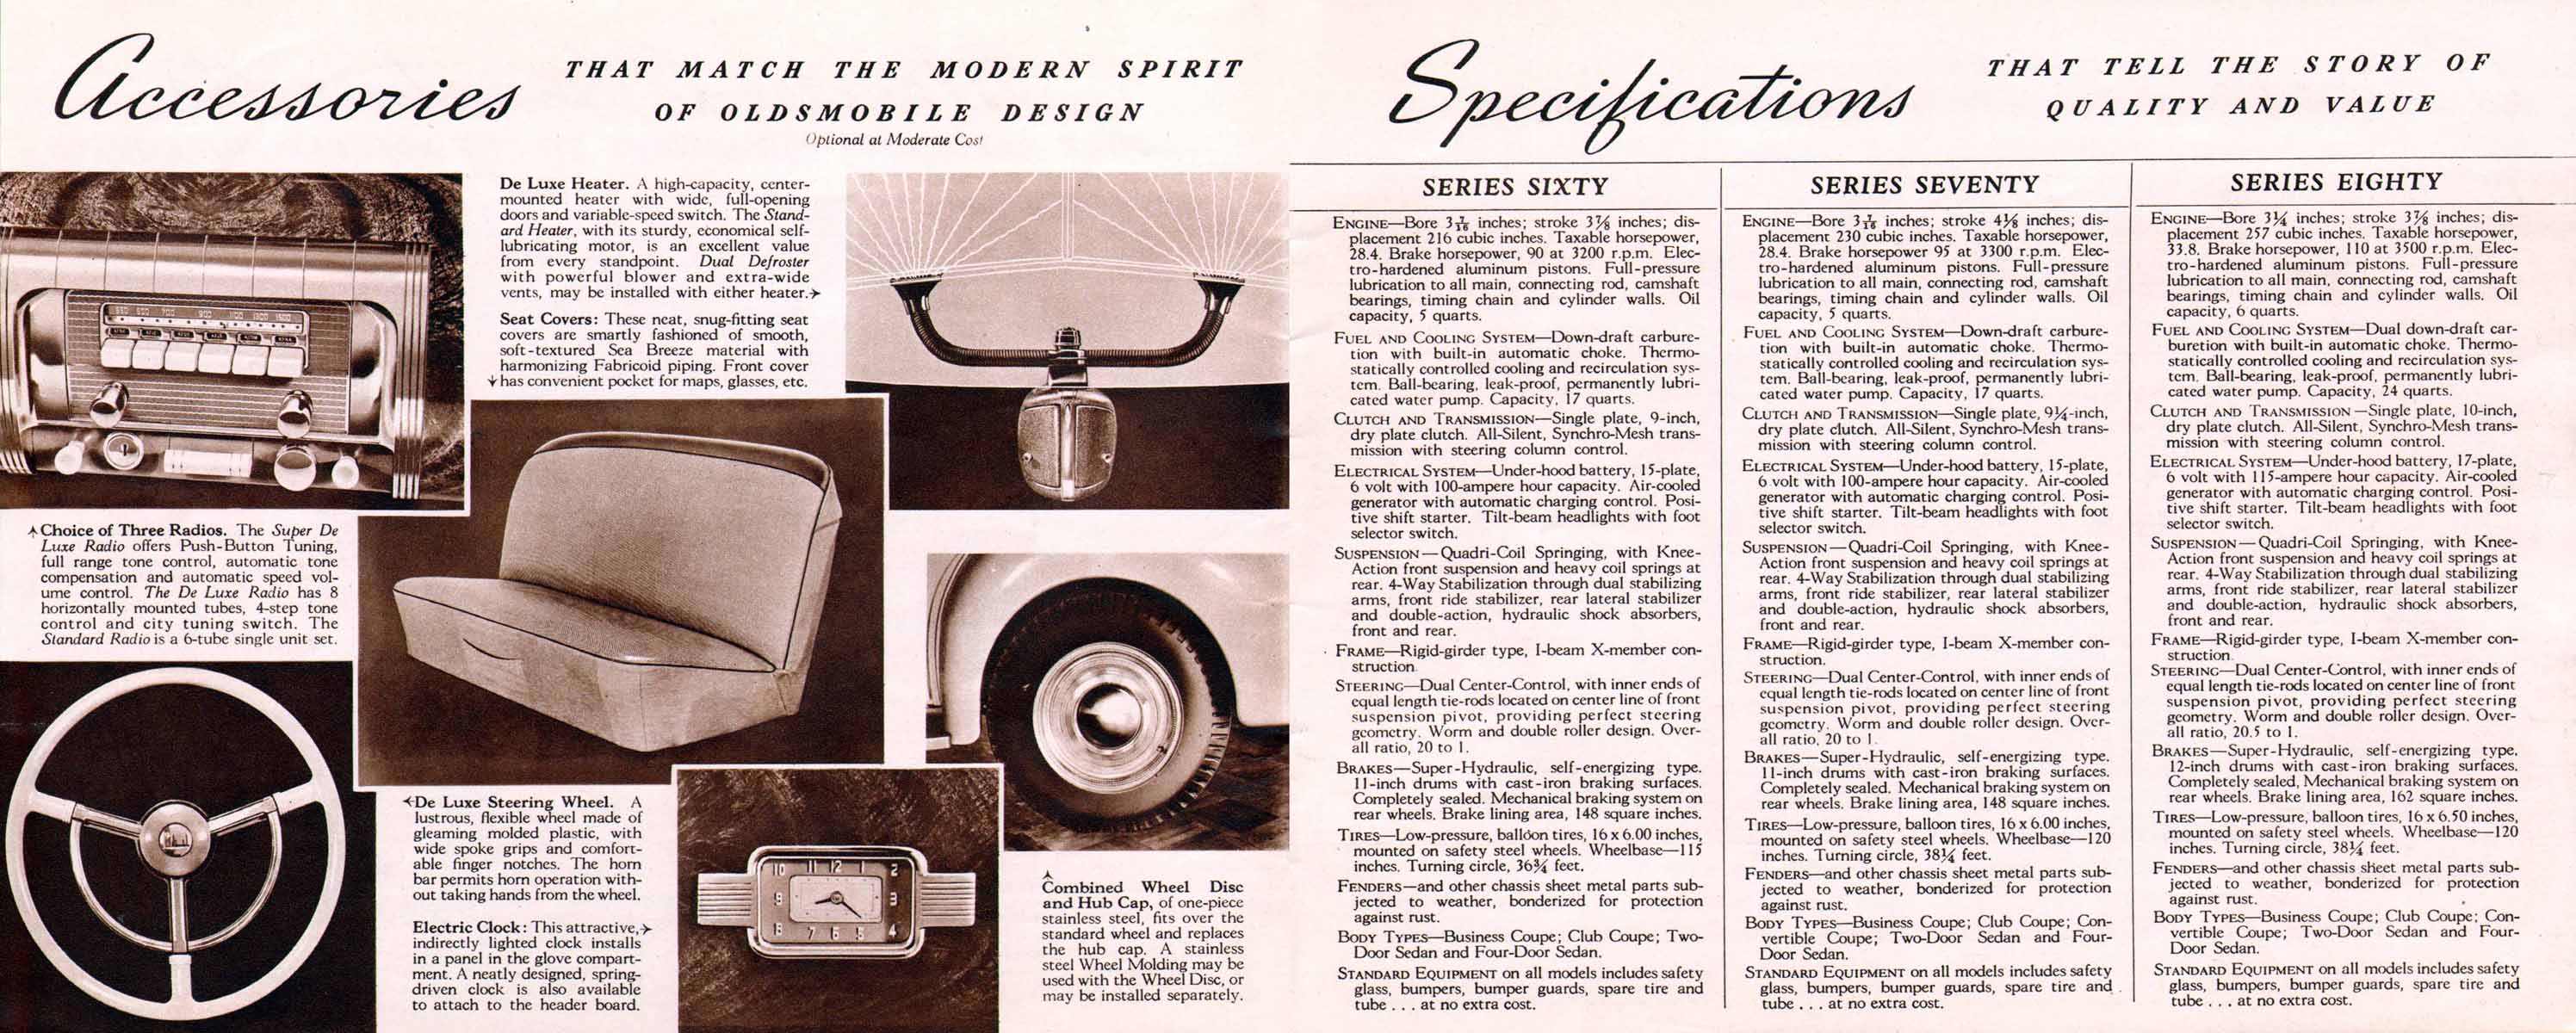 1939 Oldsmobile Motor Cars Brochure Page 6